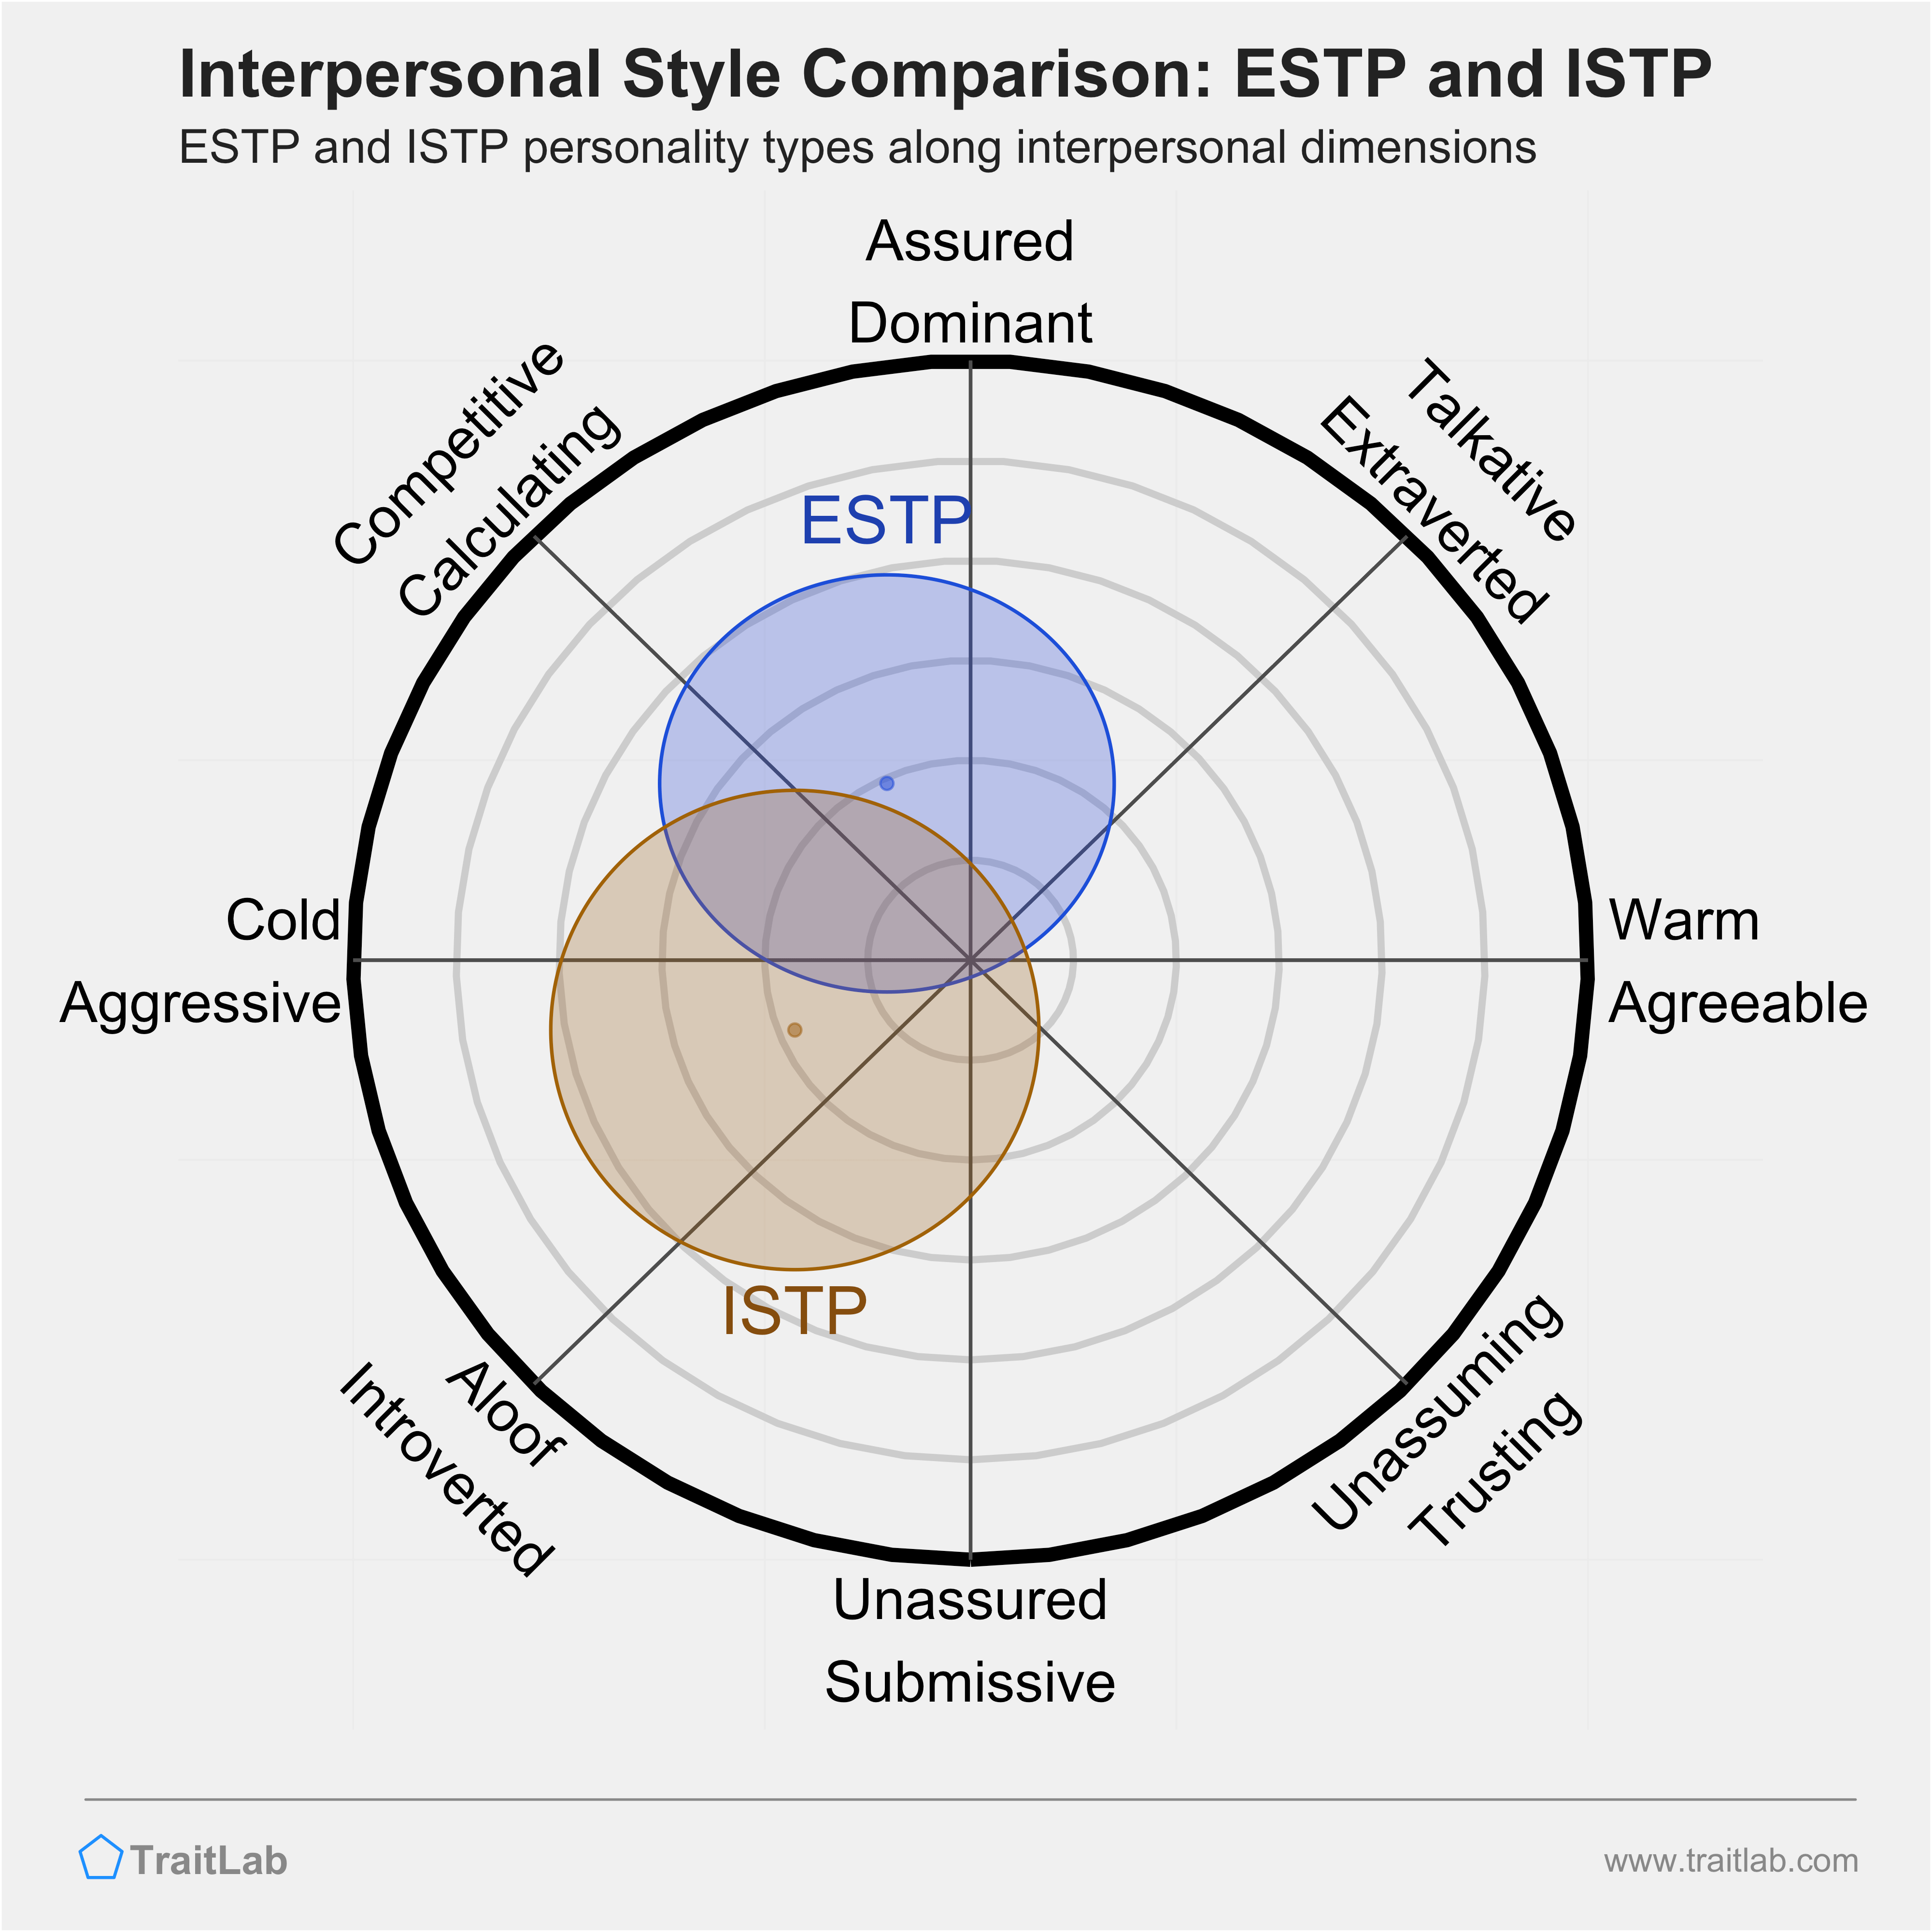 ESTP and ISTP comparison across interpersonal dimensions